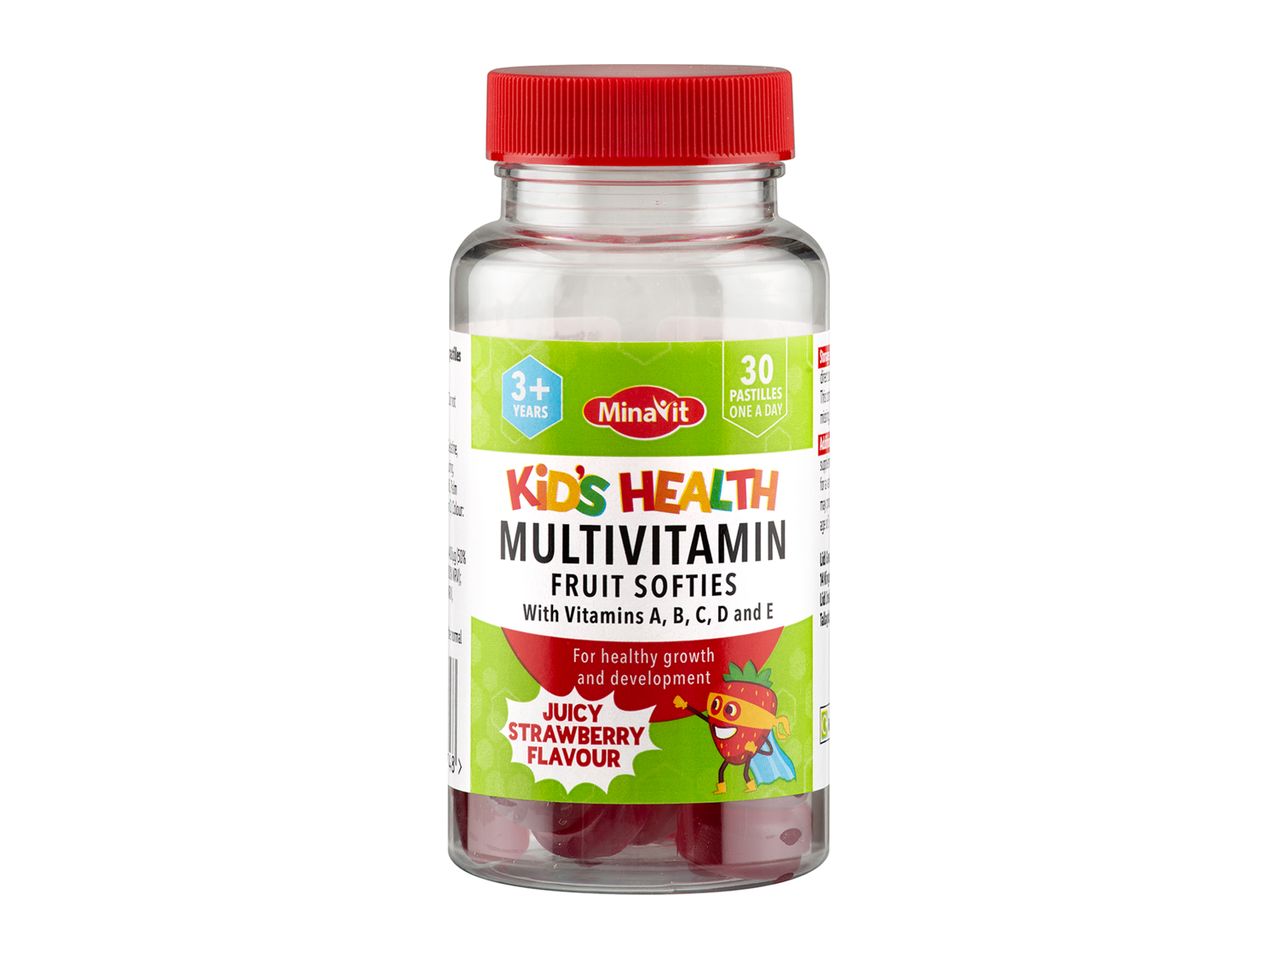 Go to full screen view: Minavit Kids' Multivitamin Fruit Softies - Image 1